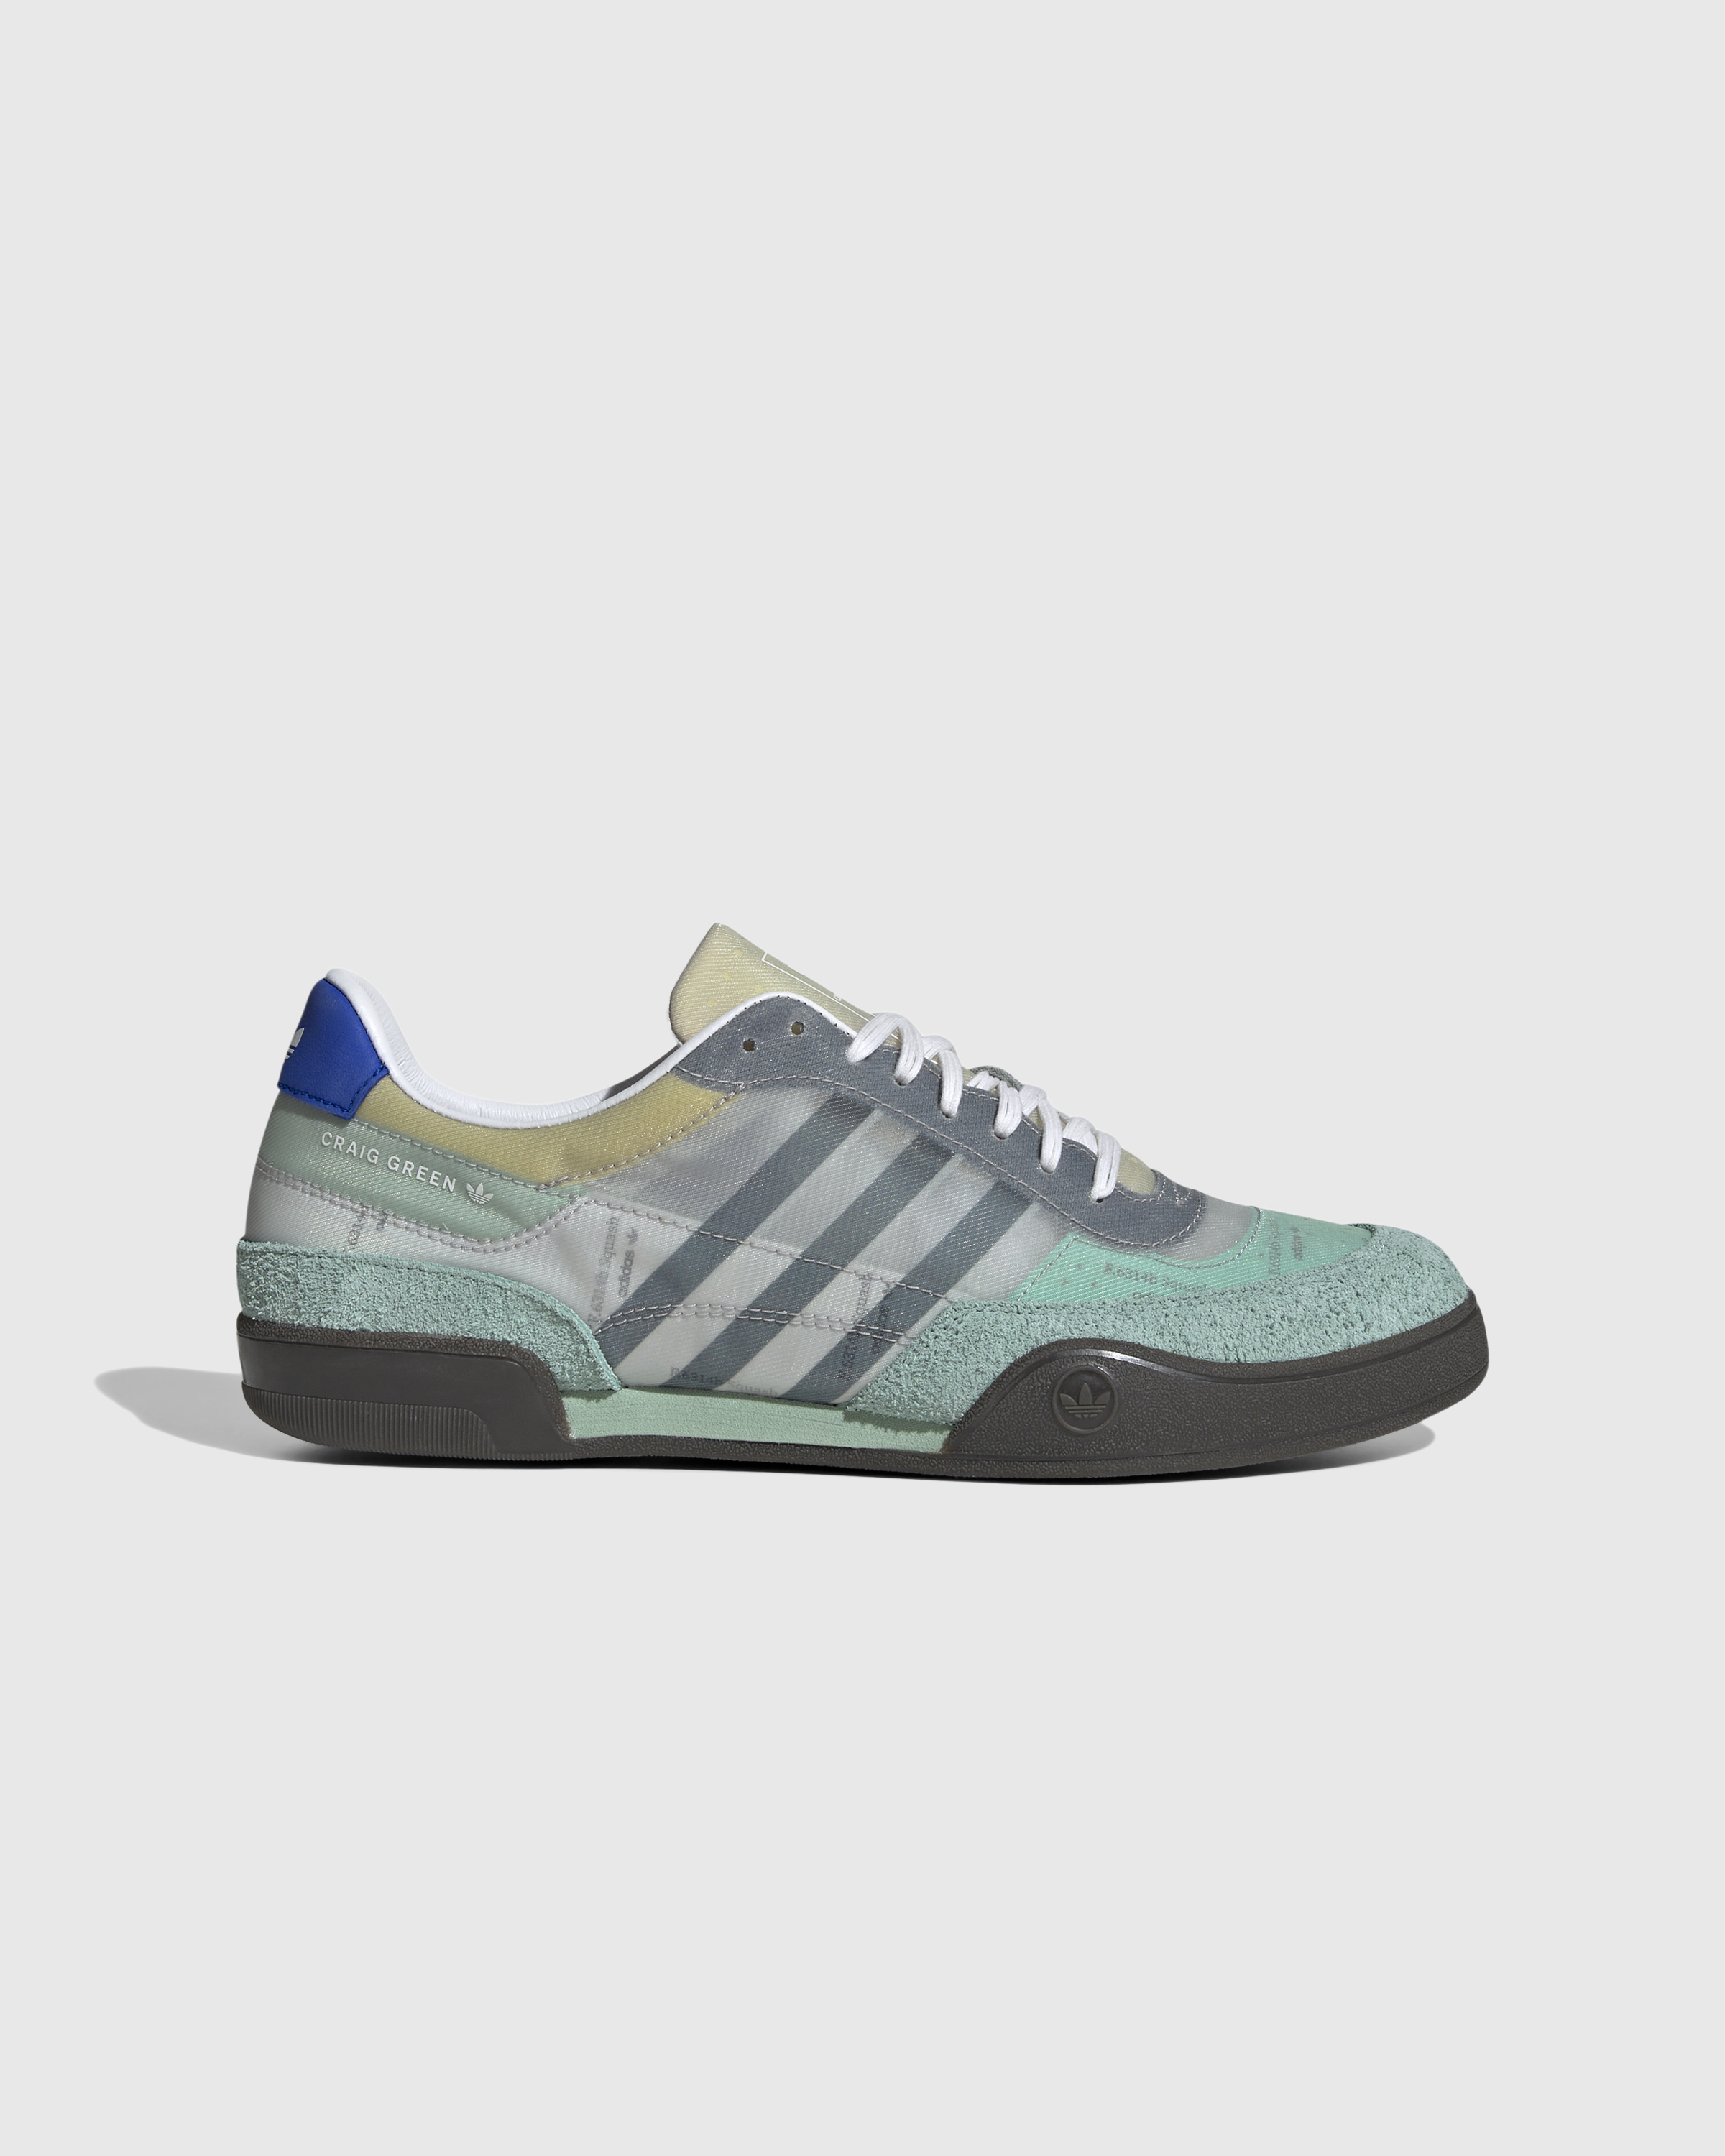 Adidas x Craig Green – Squash Polta Akh Green/Core White/Gum - Low Top Sneakers - Green - Image 1